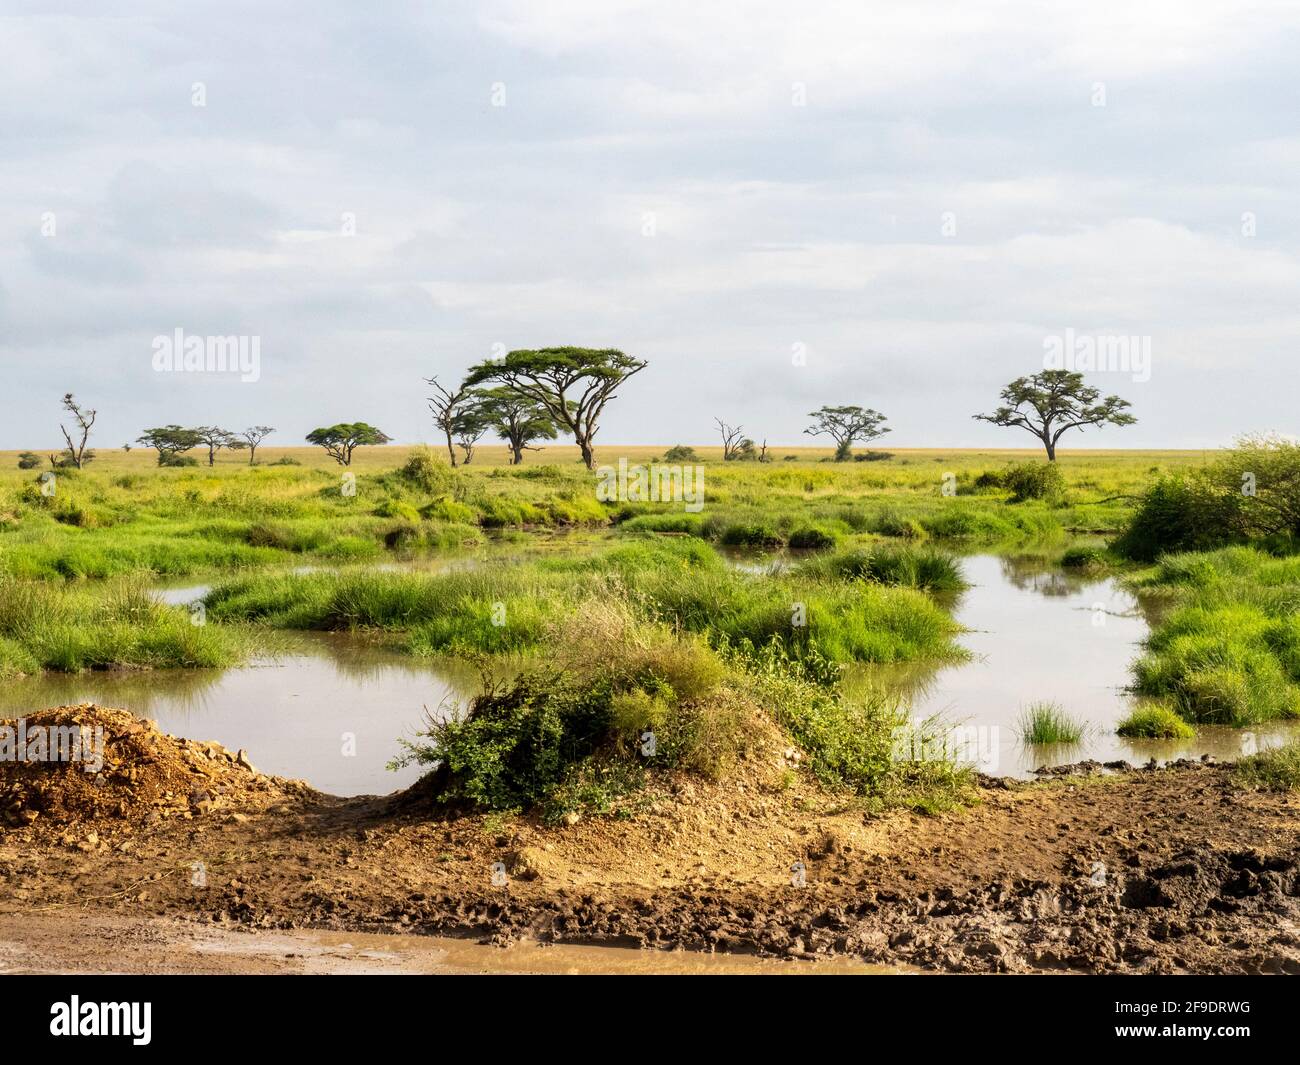 Serengeti National Park, Tanzania, Africa - March 1, 2020: Scenic view of the Serengeti Stock Photo